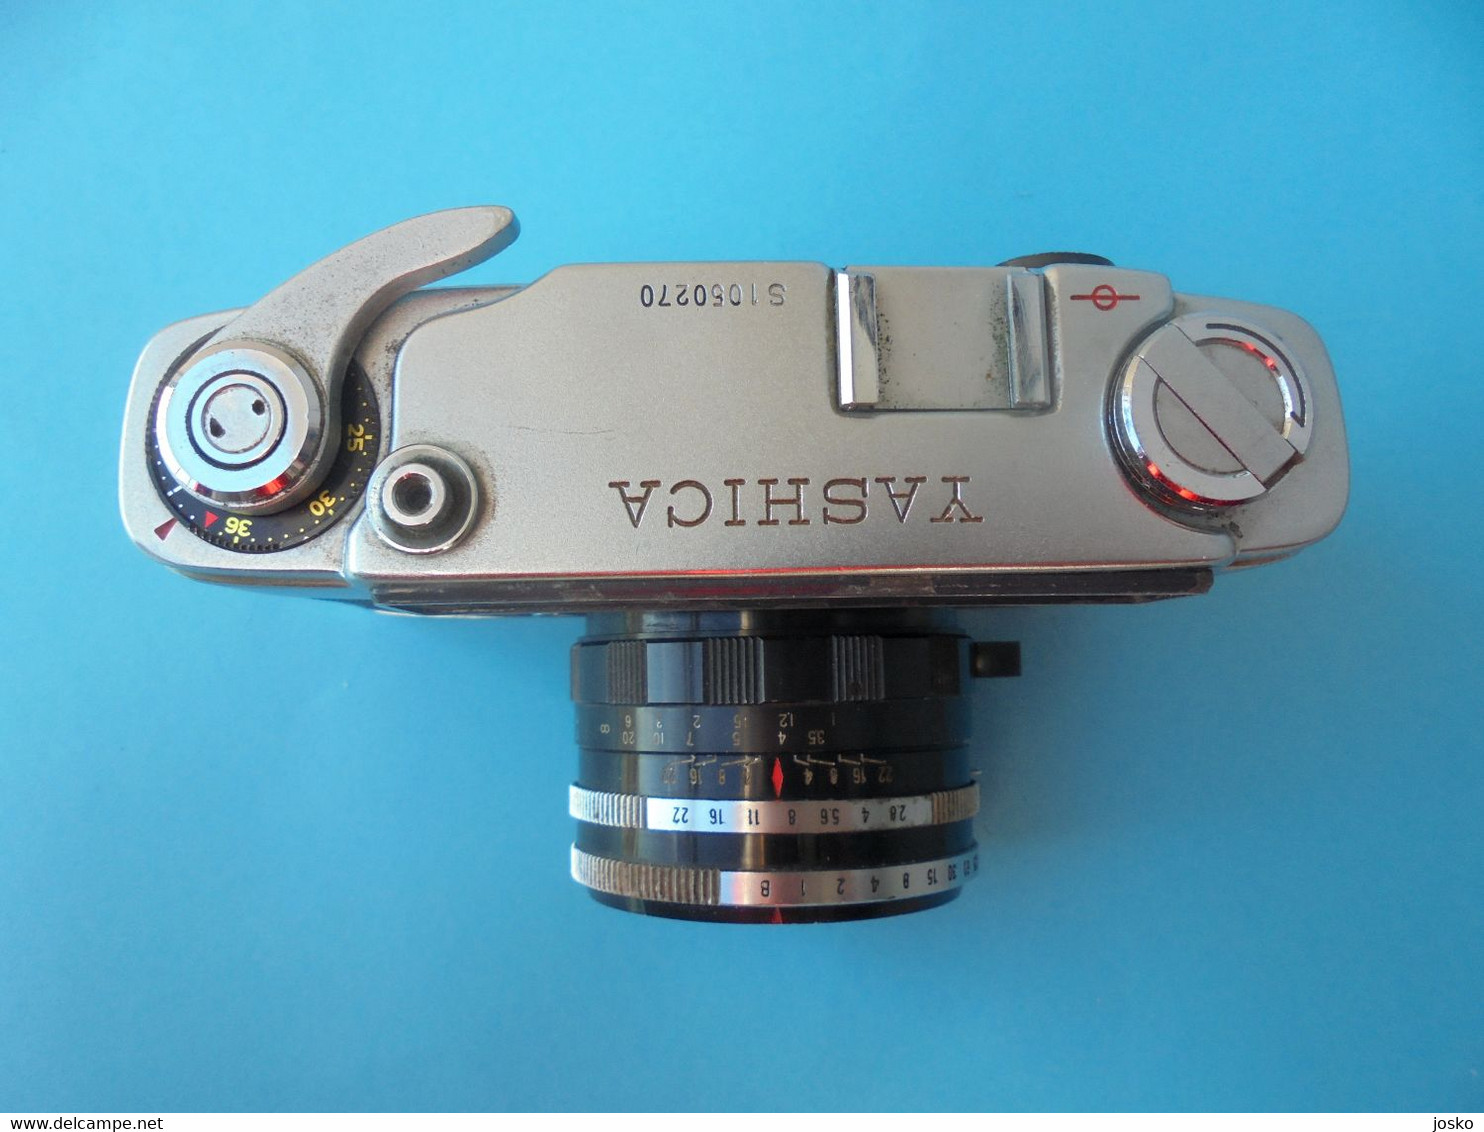 YASHICA - CAMPUS ... Yashinon I:2.8 4.5 Cm ... Vintage Camera (Made In Japan) * Kamera Telecamera Camara - Appareils Photo